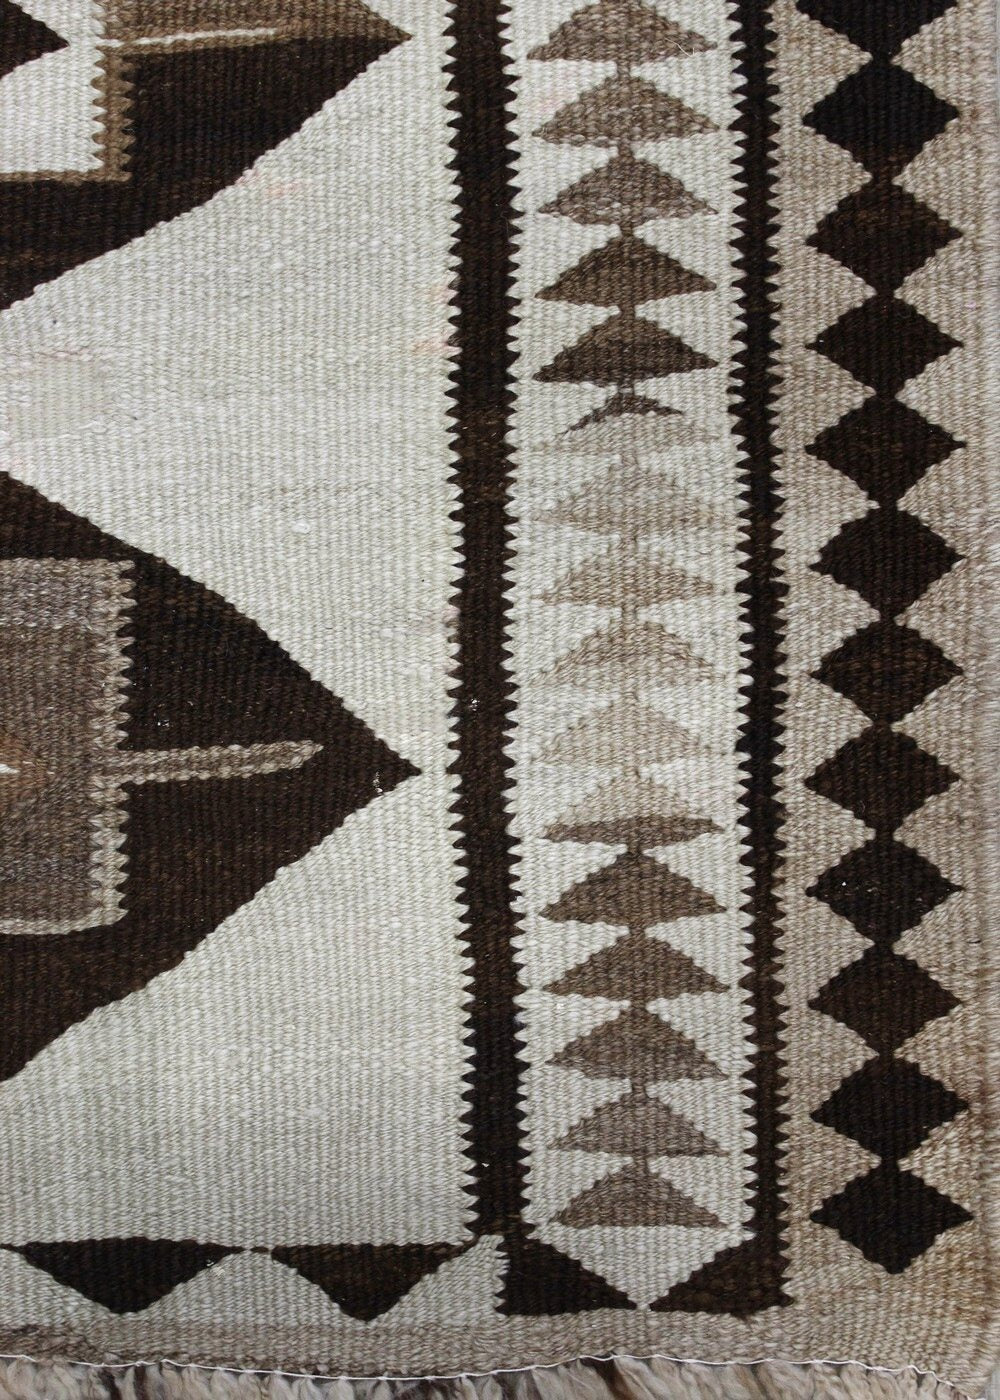 Vintage Herki Kilim Handwoven Tribal Rug, J67095